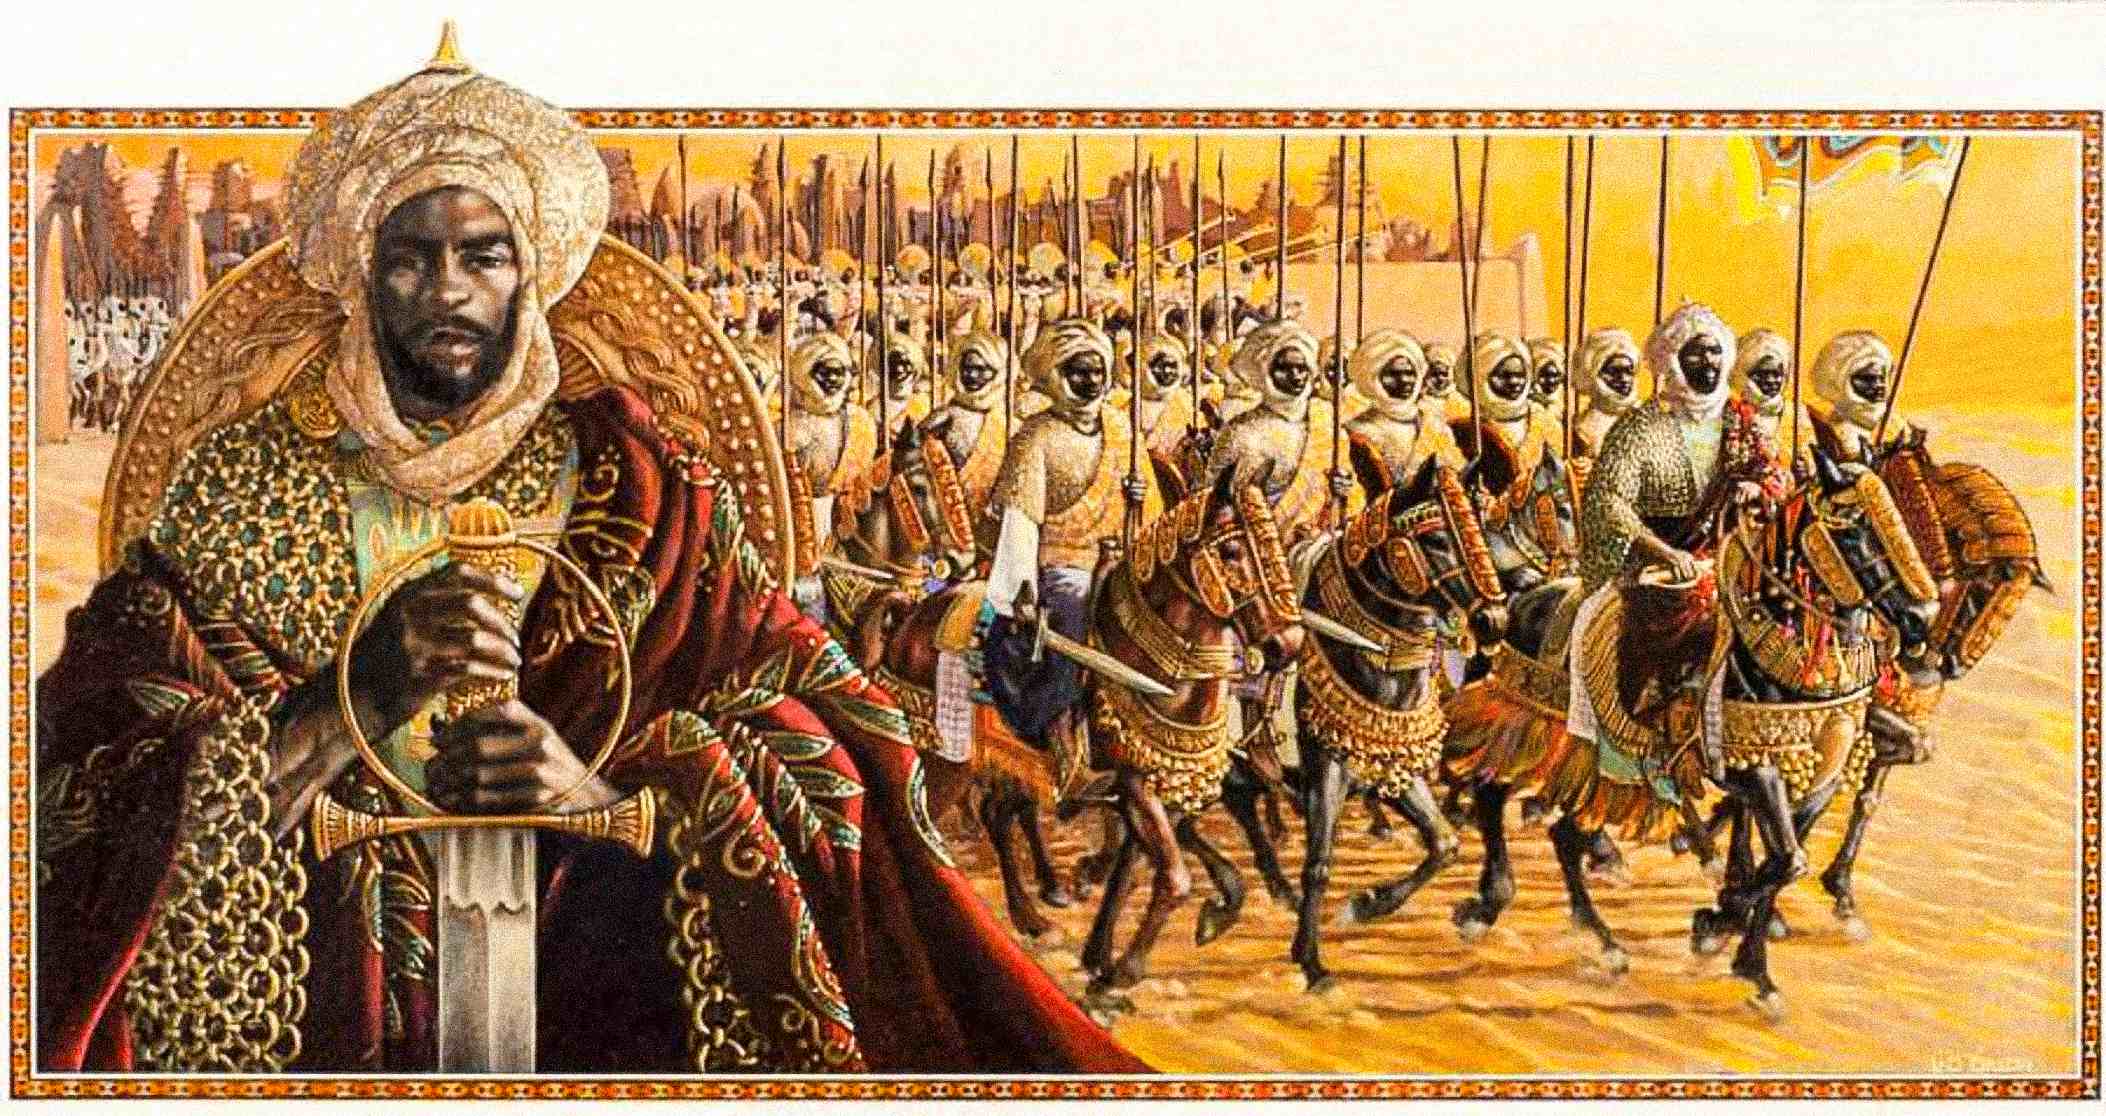 Représentation artistique de l'Empire de Mansa Musa